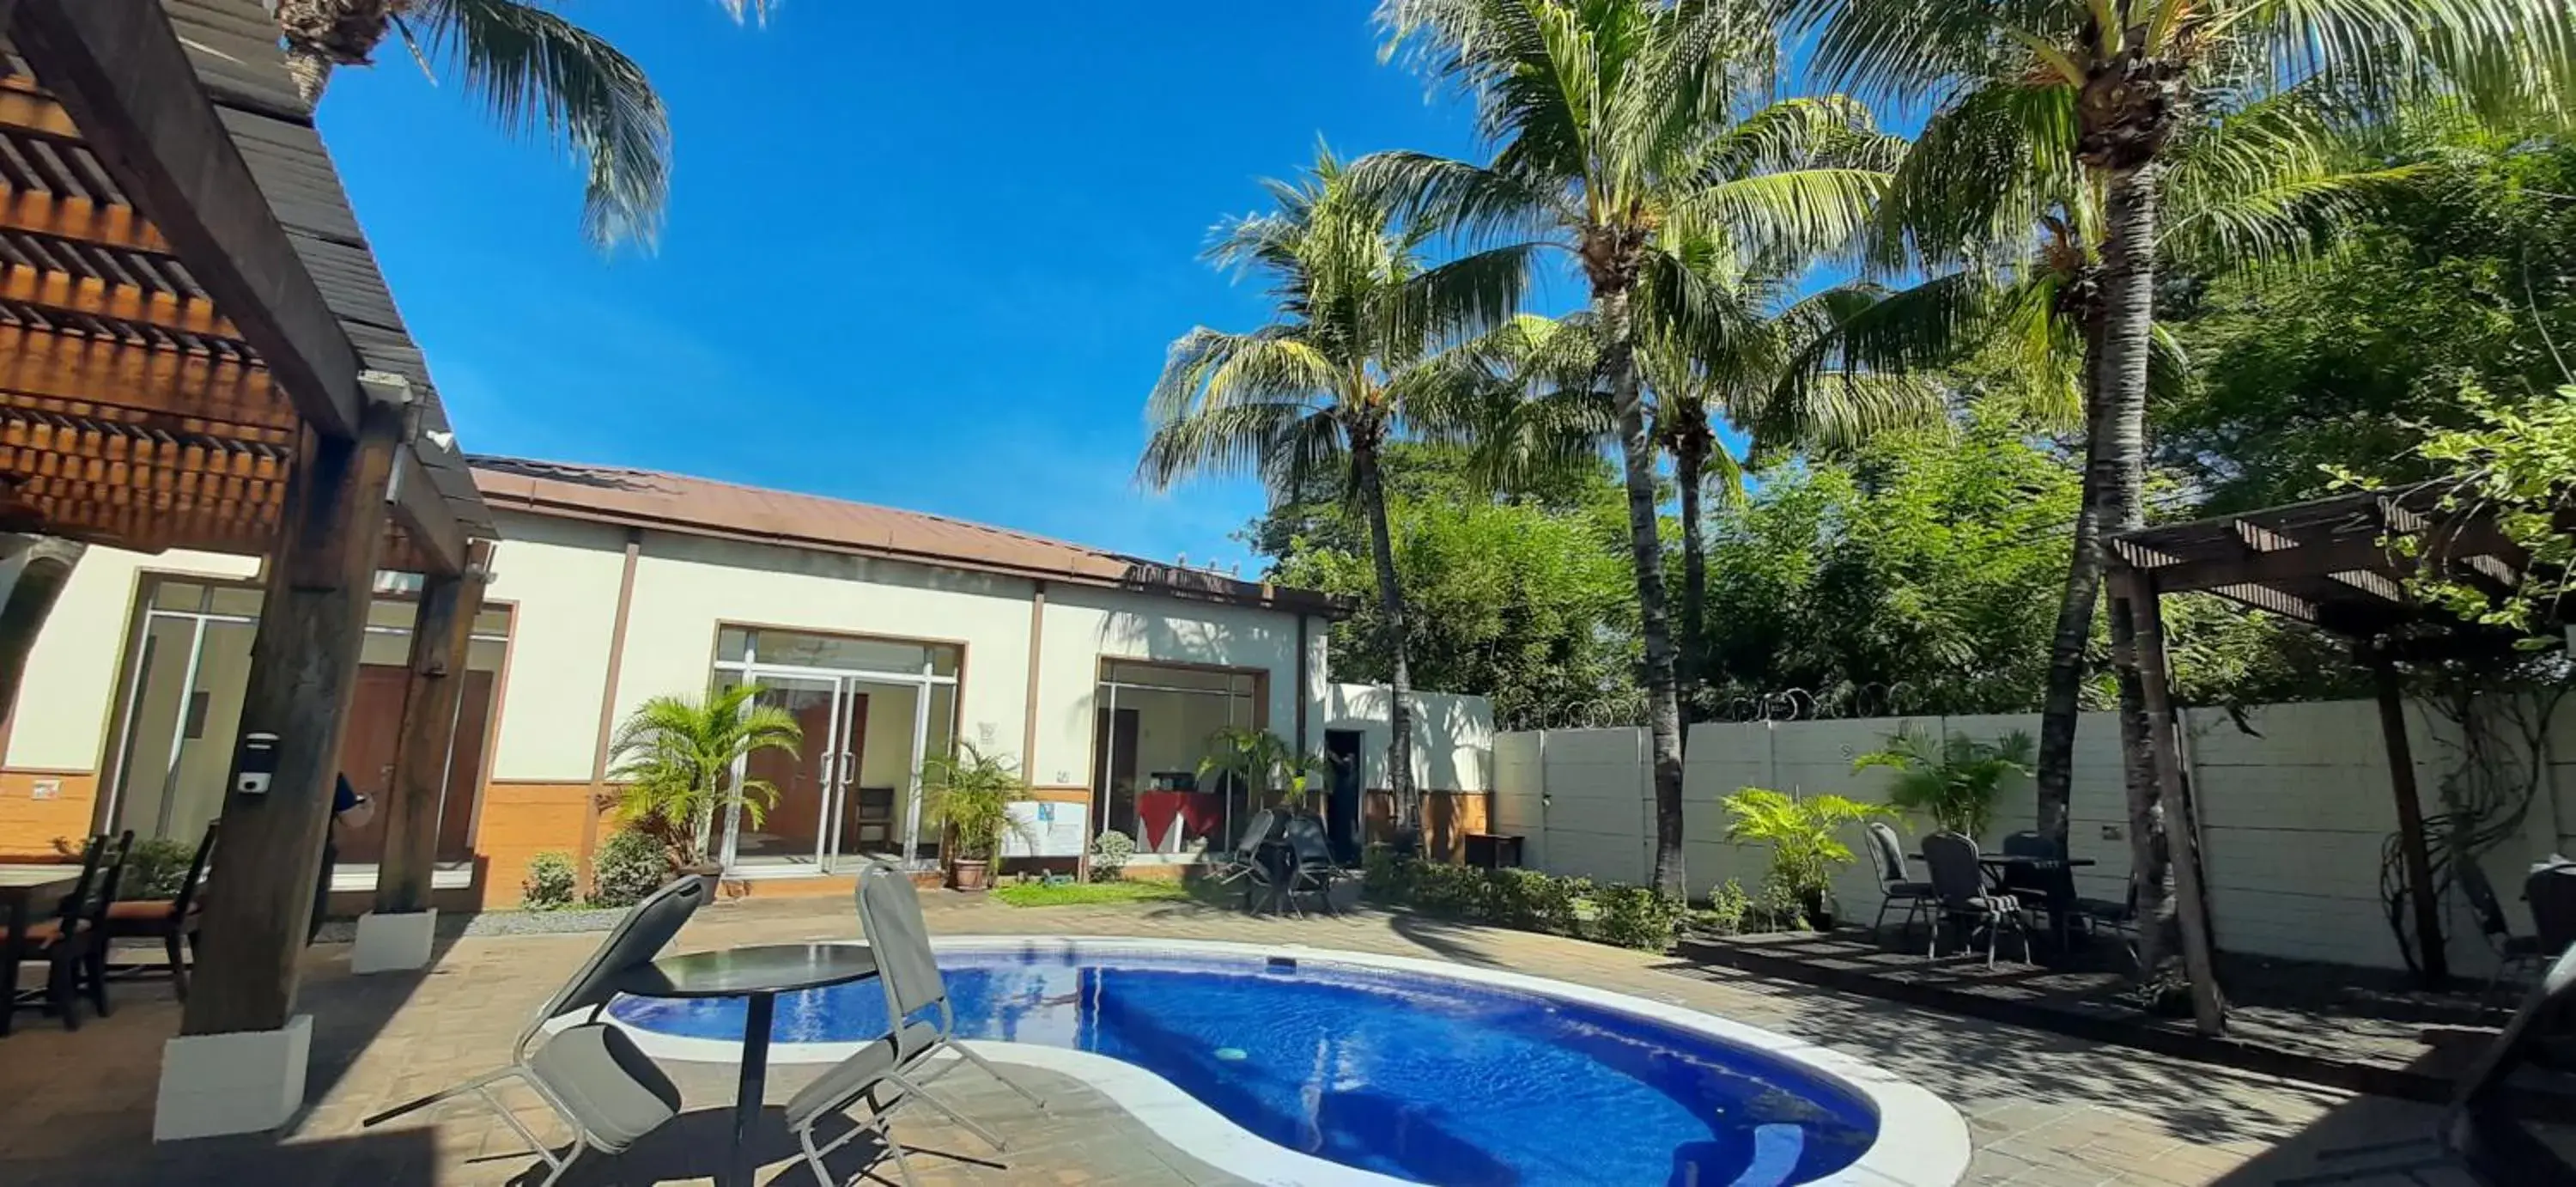 Swimming pool in Comfort Inn Real San Miguel